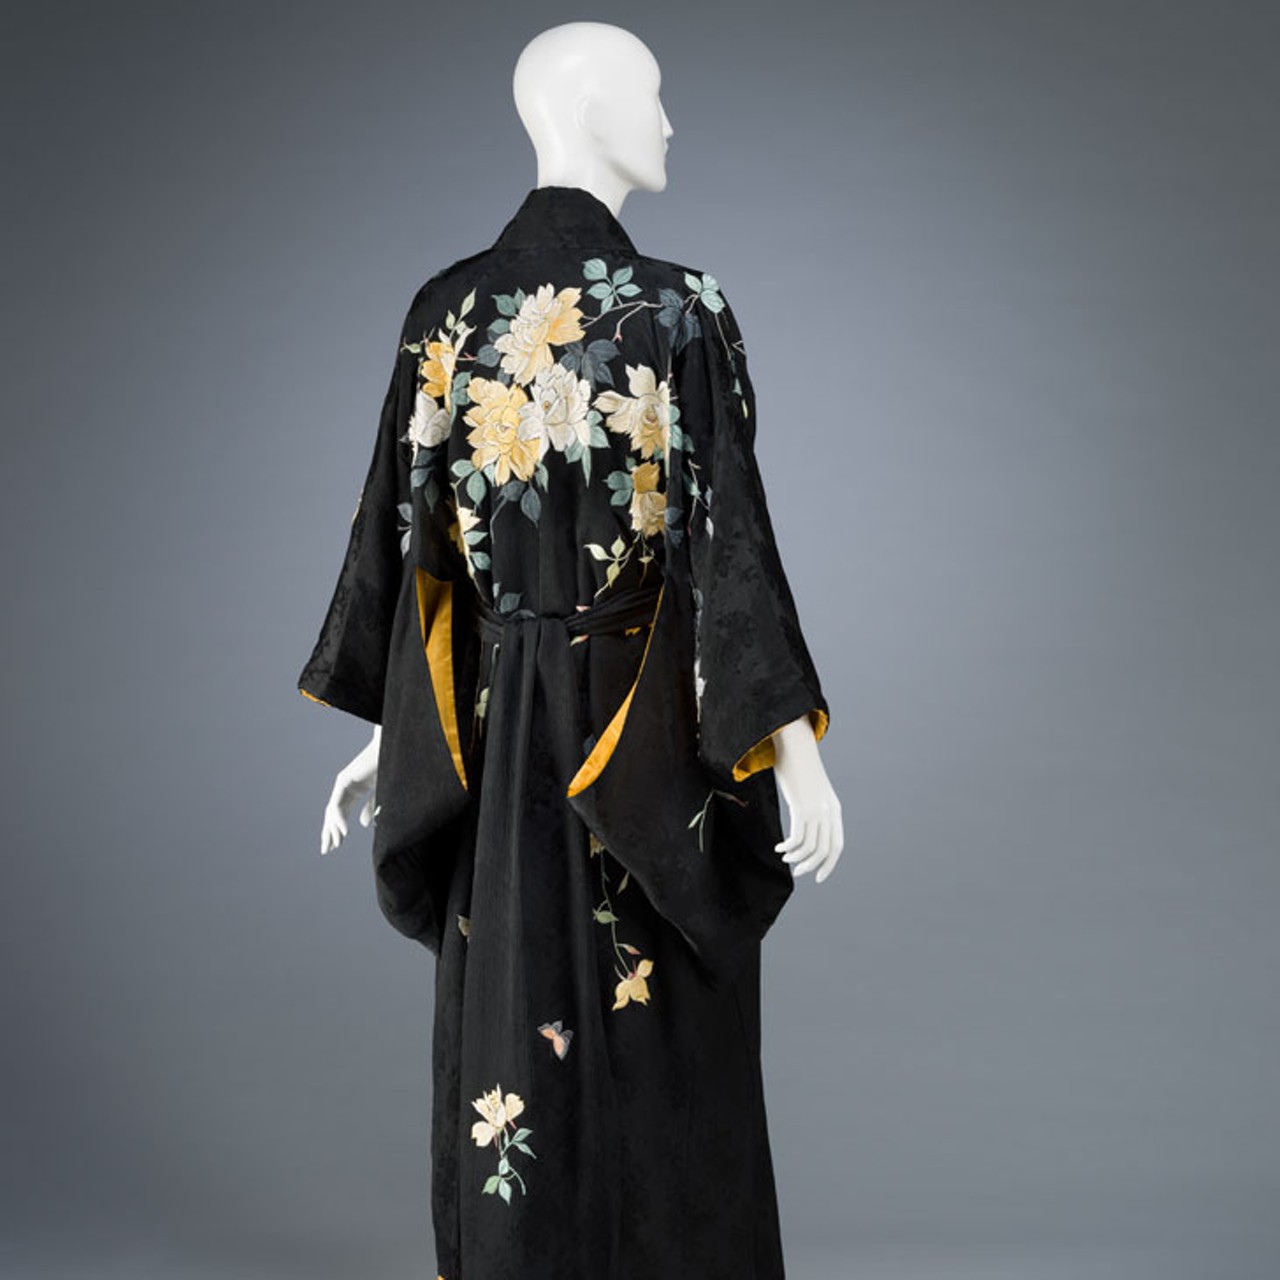 Silk kimono and sash circa 1920
Cincinnati Art Museum; Gift in memory of Mrs. William Leo Doepke (Ethel Page) by her granddaughter, Sara Doepke
Photo by Rob Deslongchamps